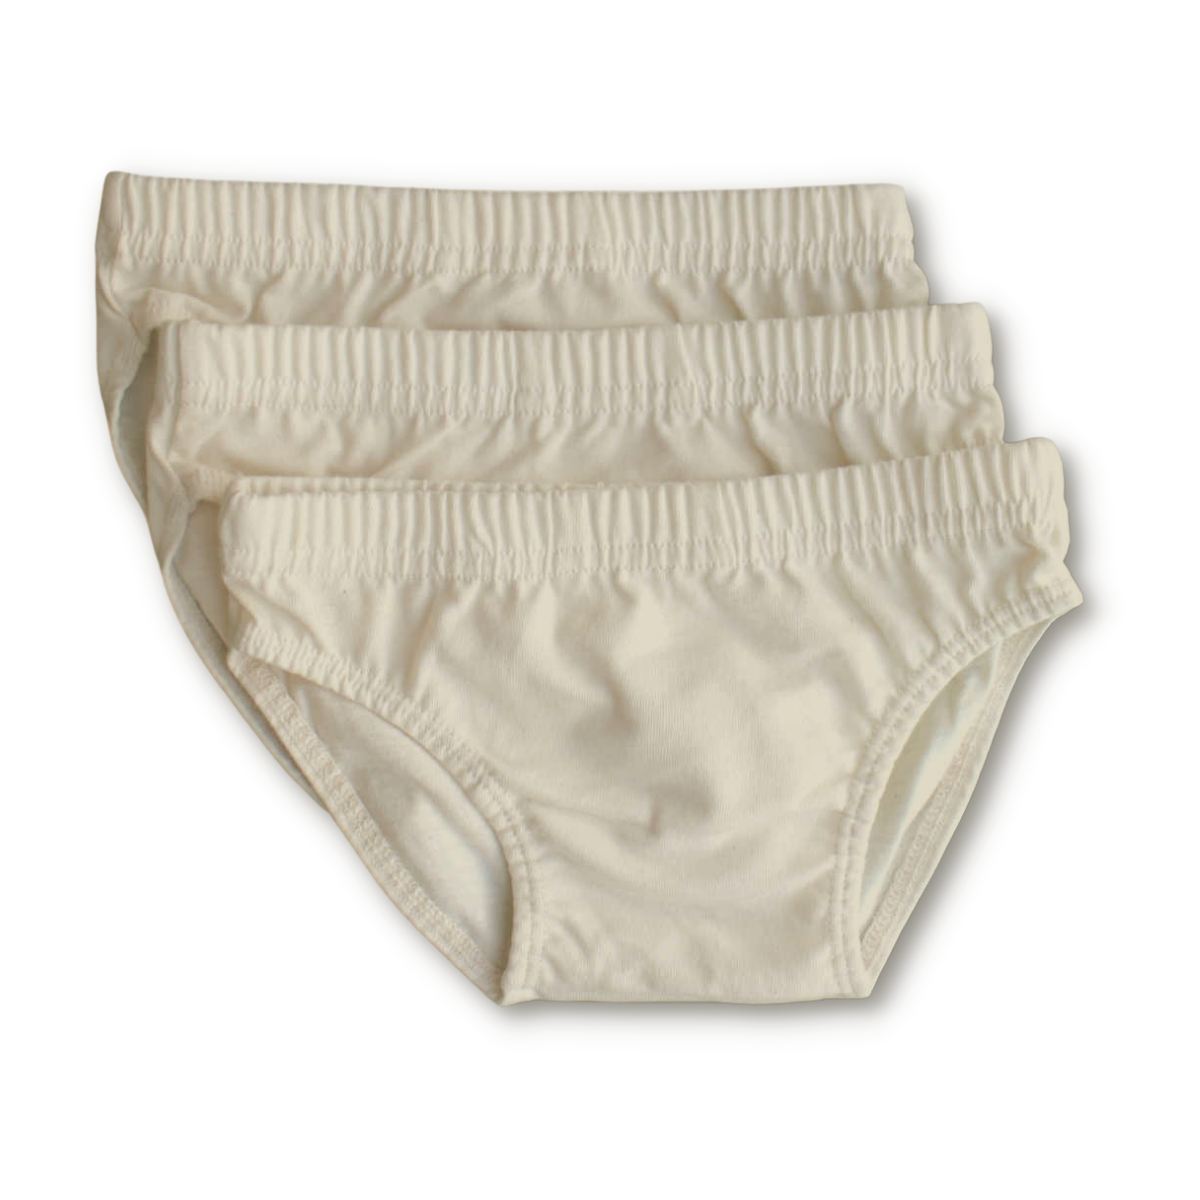 Eco-Friendly & Sustainable Underwear For Kids - Umbel Organics